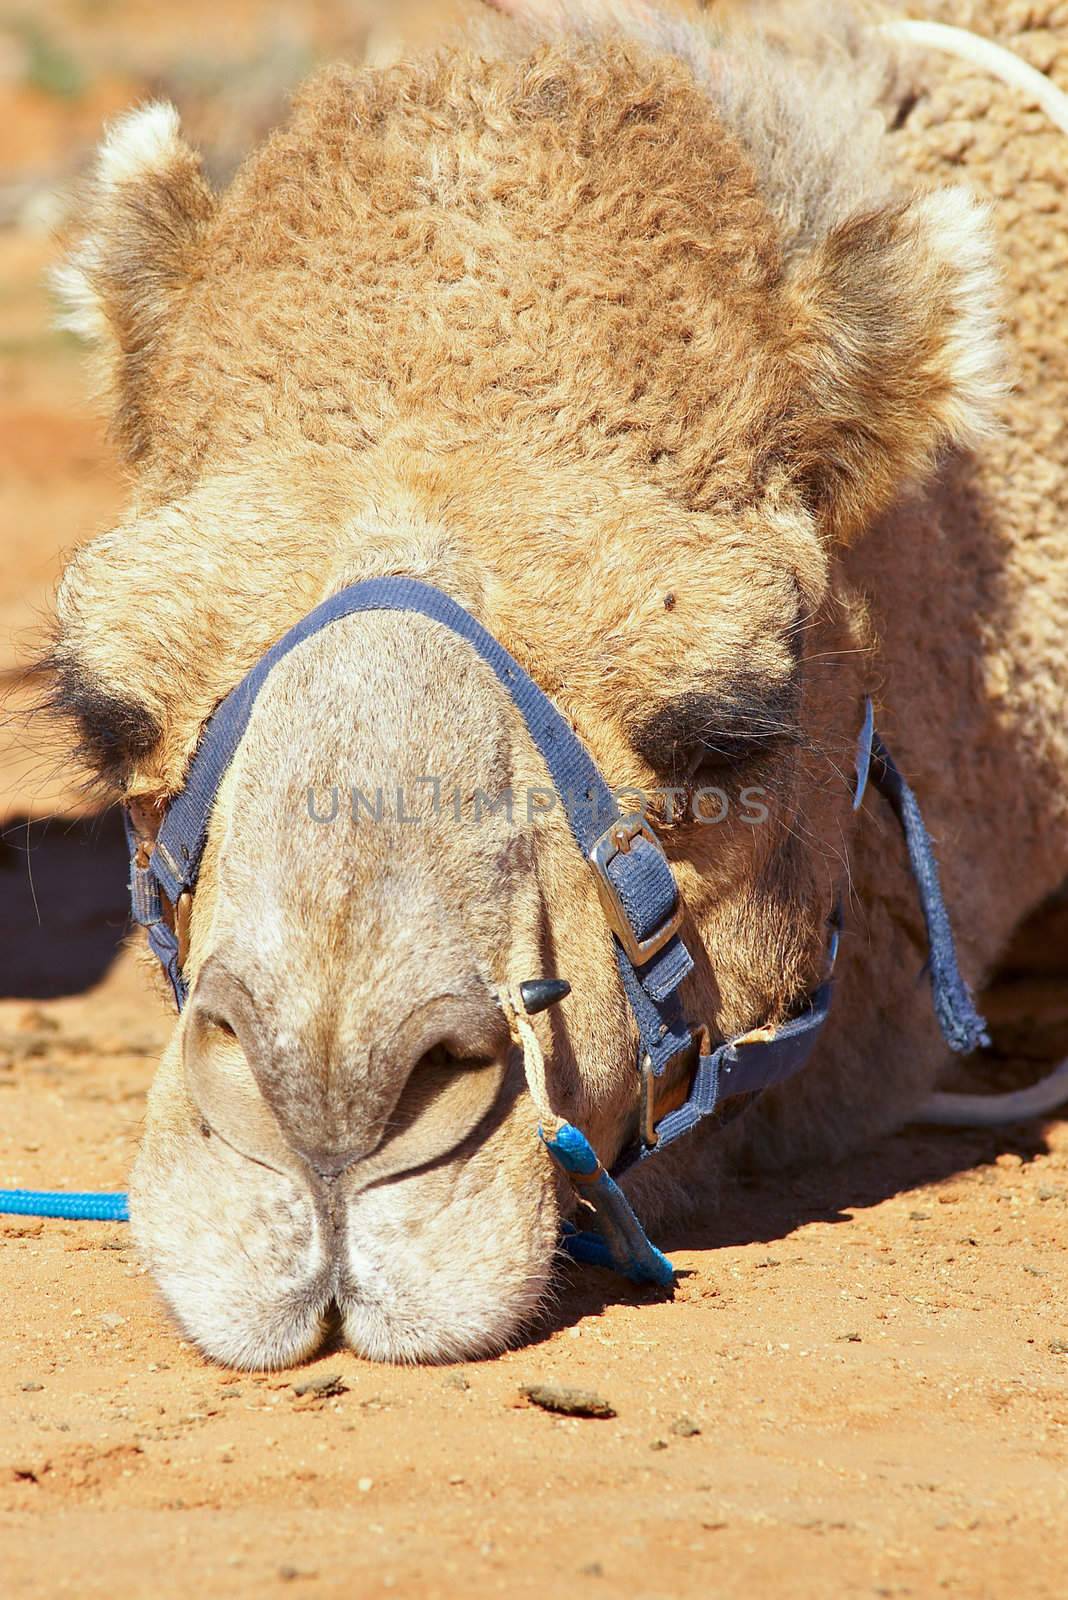 sulking camel